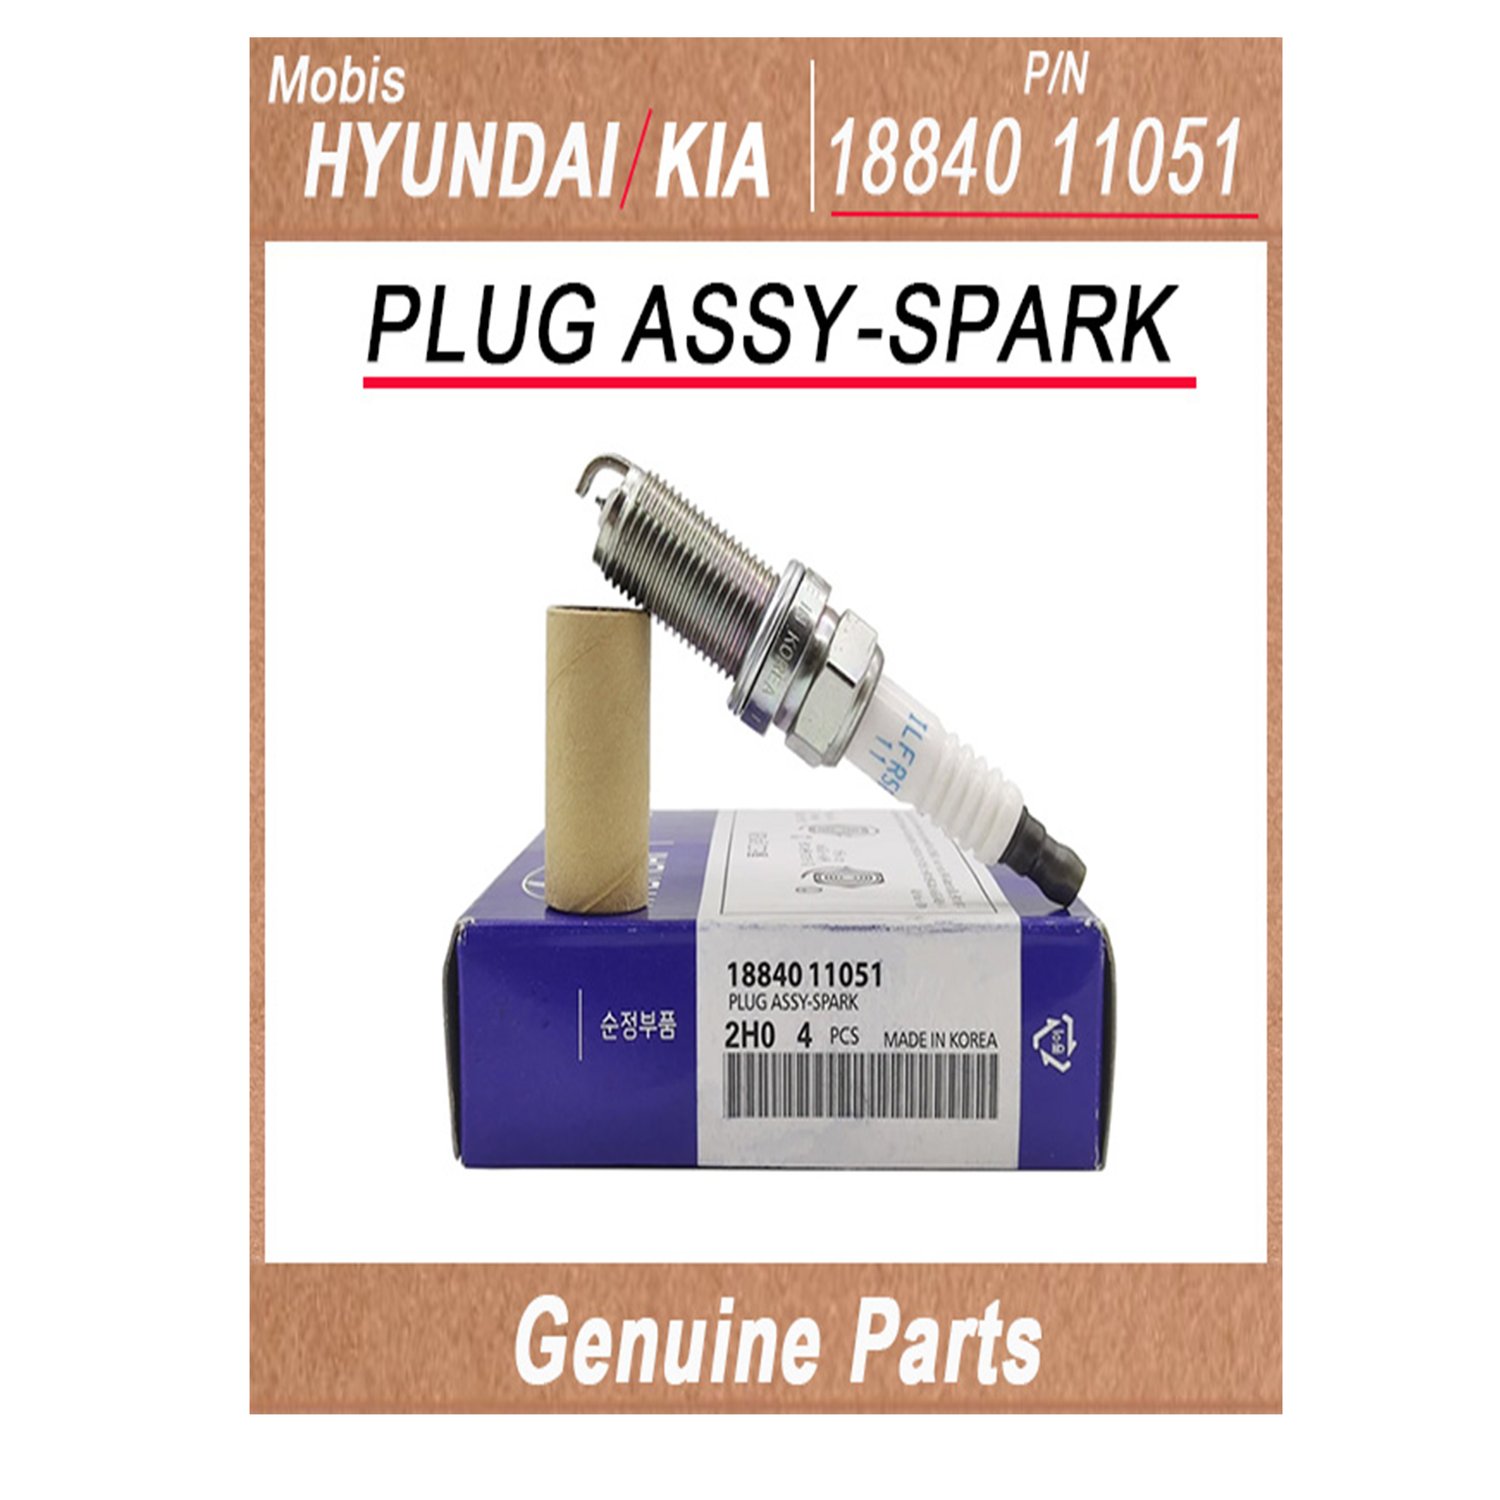 1884011051 _ PLUG ASSY_SPARK _ Genuine Korean Automotive Spare Parts _ Hyundai Kia _Mobis_